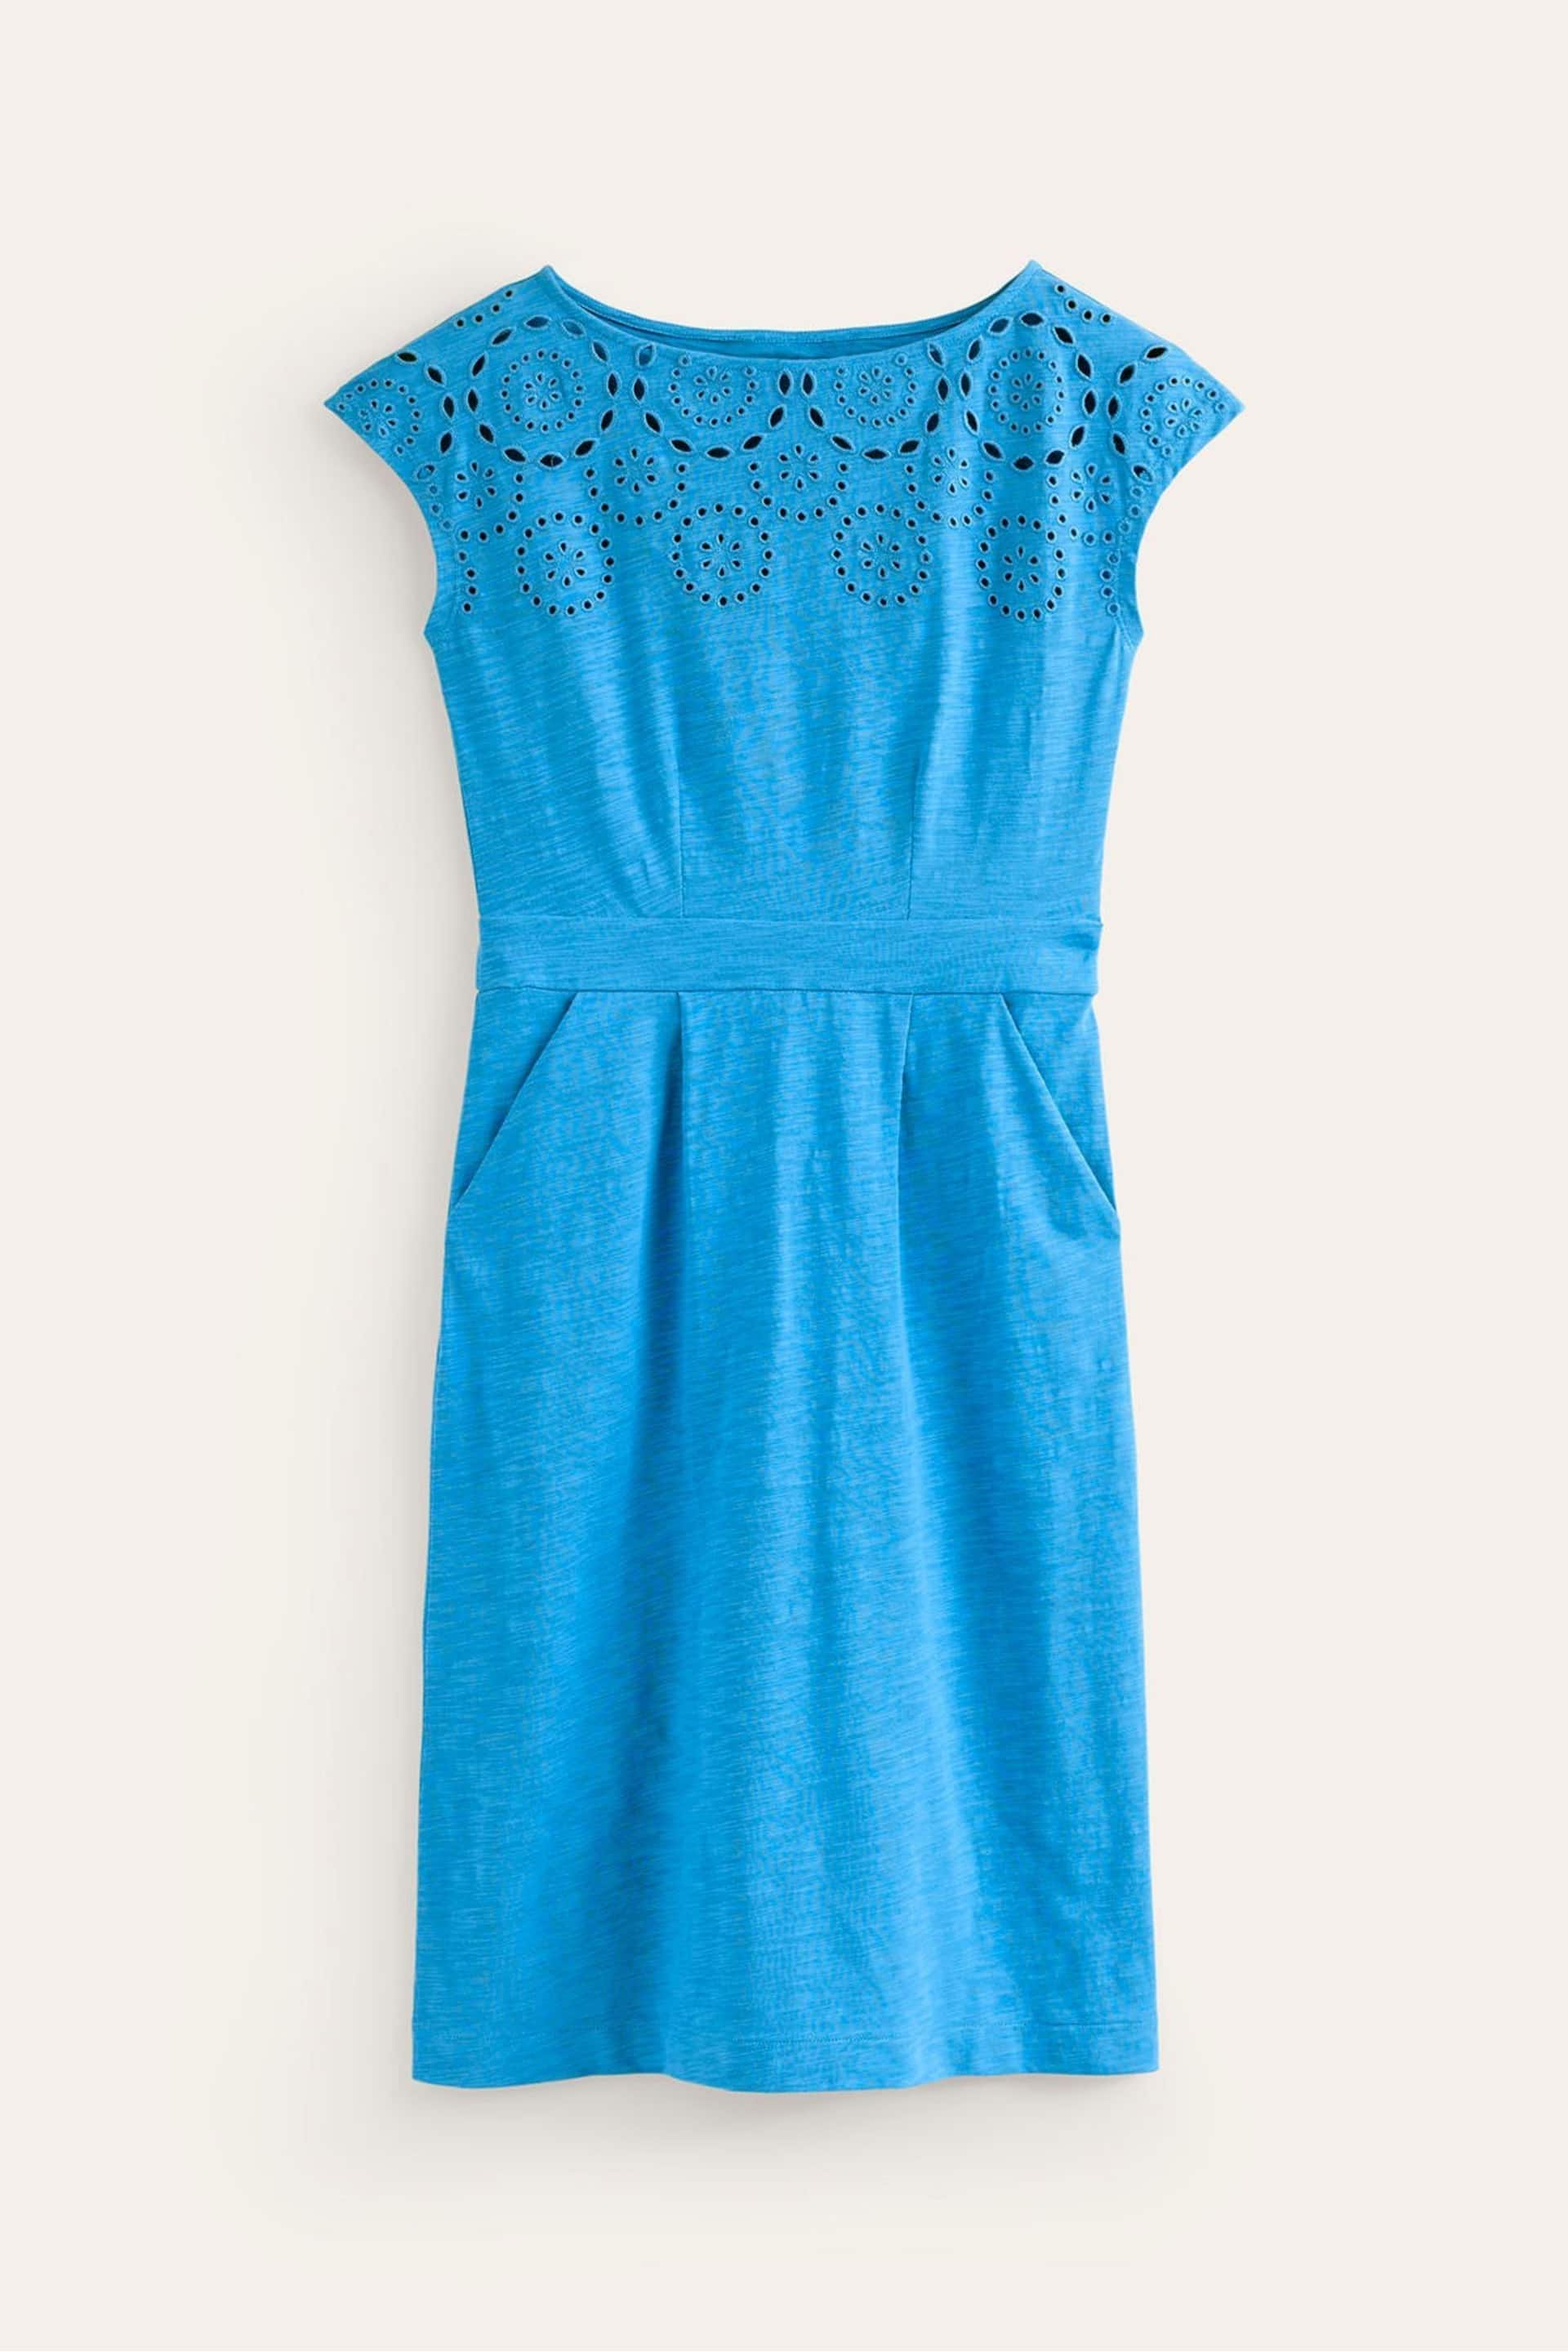 Boden Blue Petite Florrie Broderie Jersey Dress - Image 5 of 5